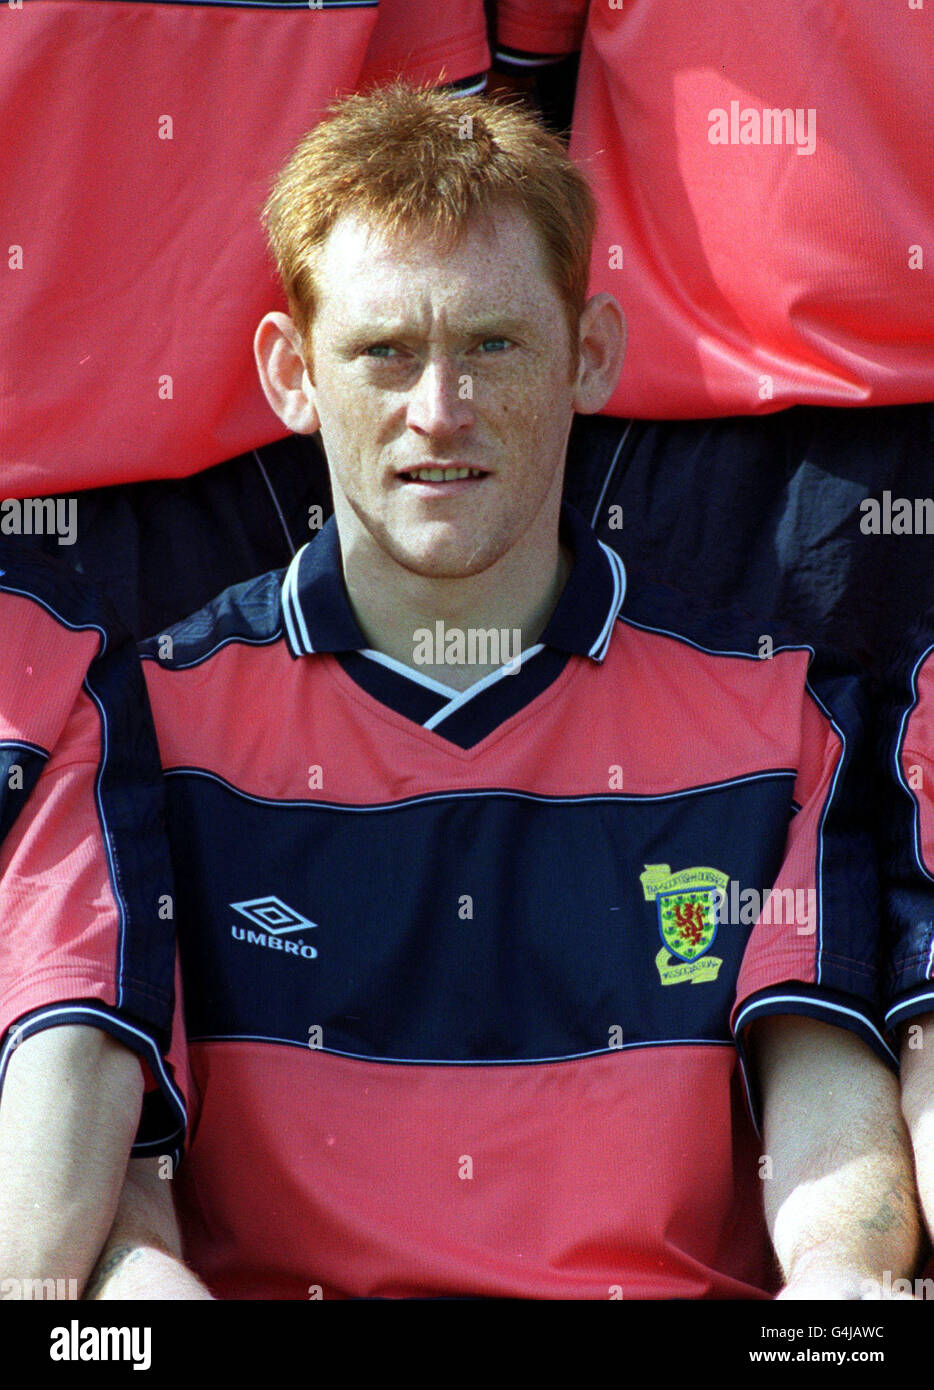 Footballer David Hopkin of Leeds United FC and Scotland. Stock Photo